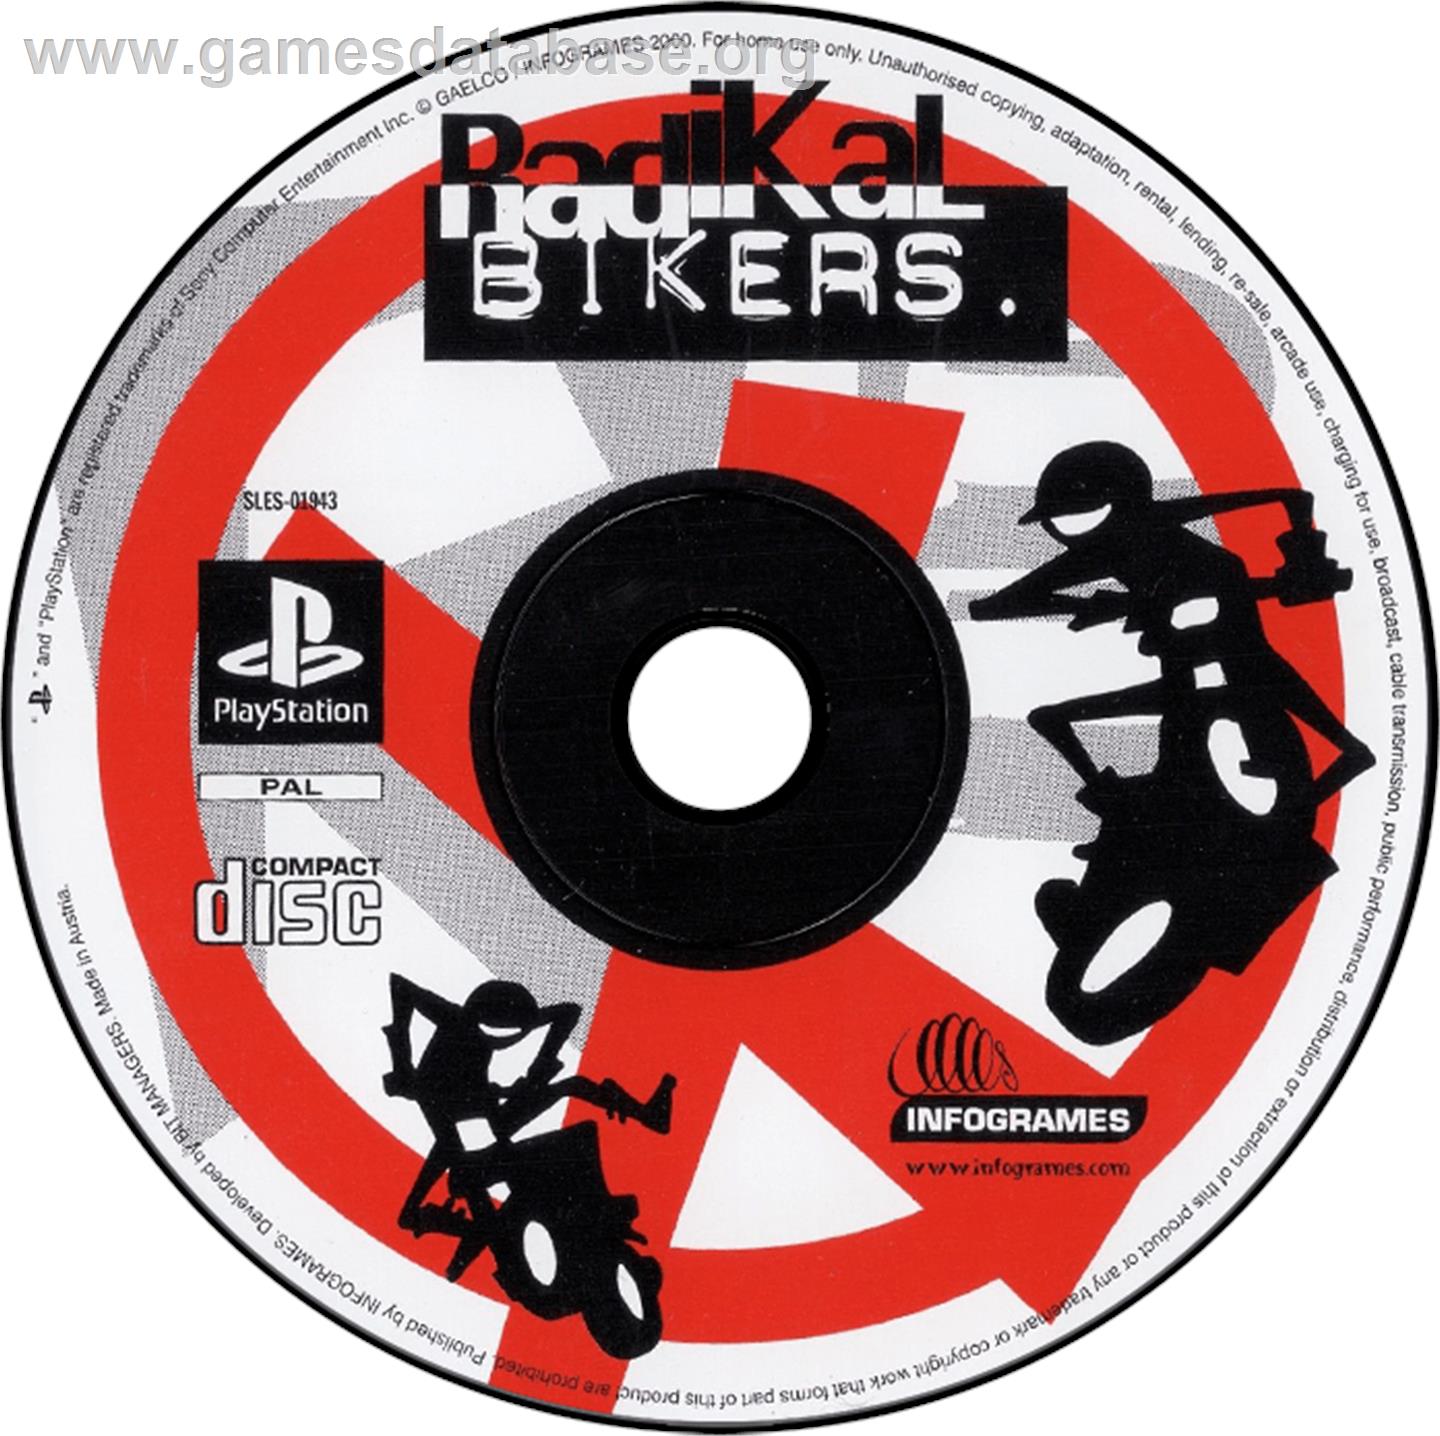 Radikal Bikers - Sony Playstation - Artwork - Disc